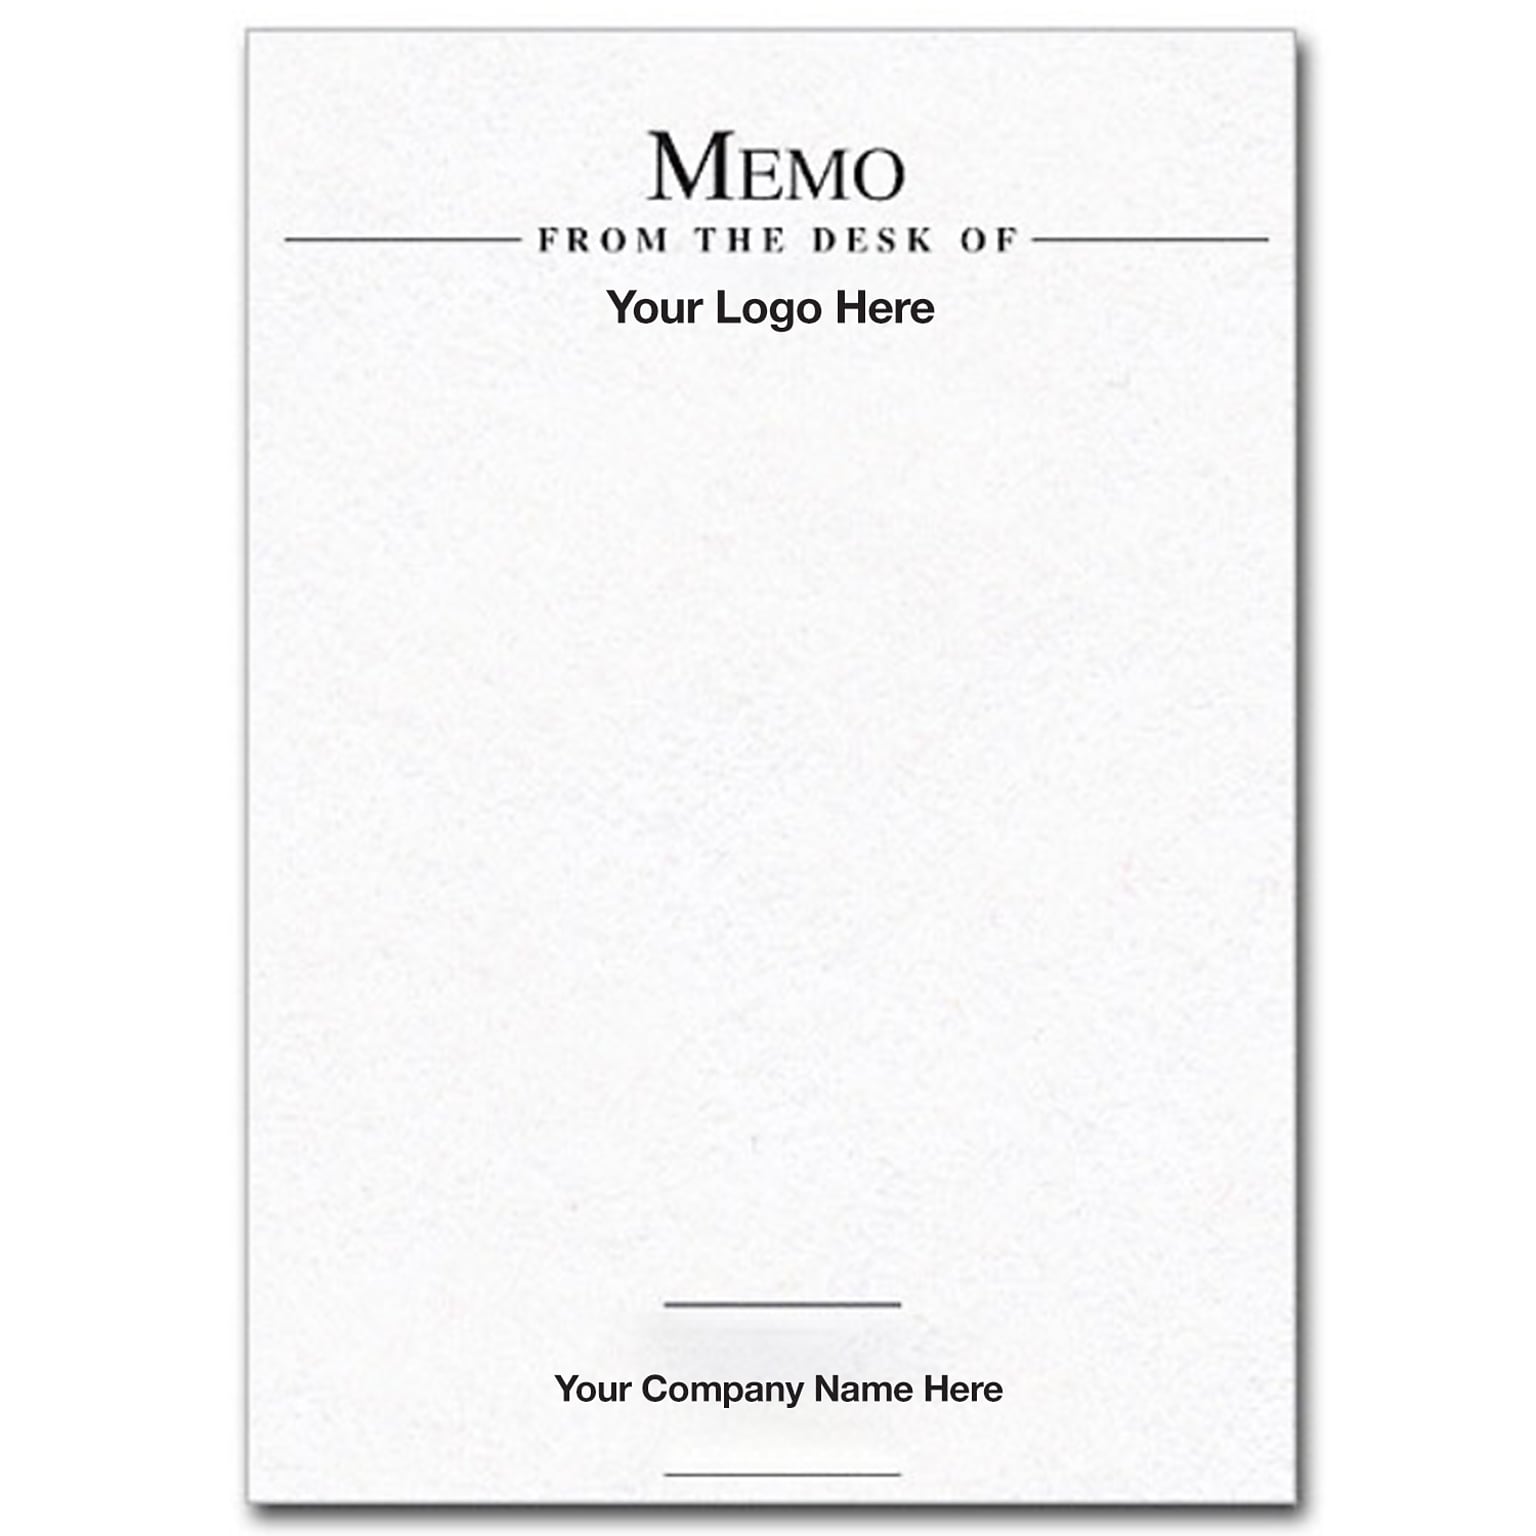 Custom Full Color Memo Pad, 5.25 x 8.375, White 20# Text Stock, Flat Ink, 50 Sheets per Pad